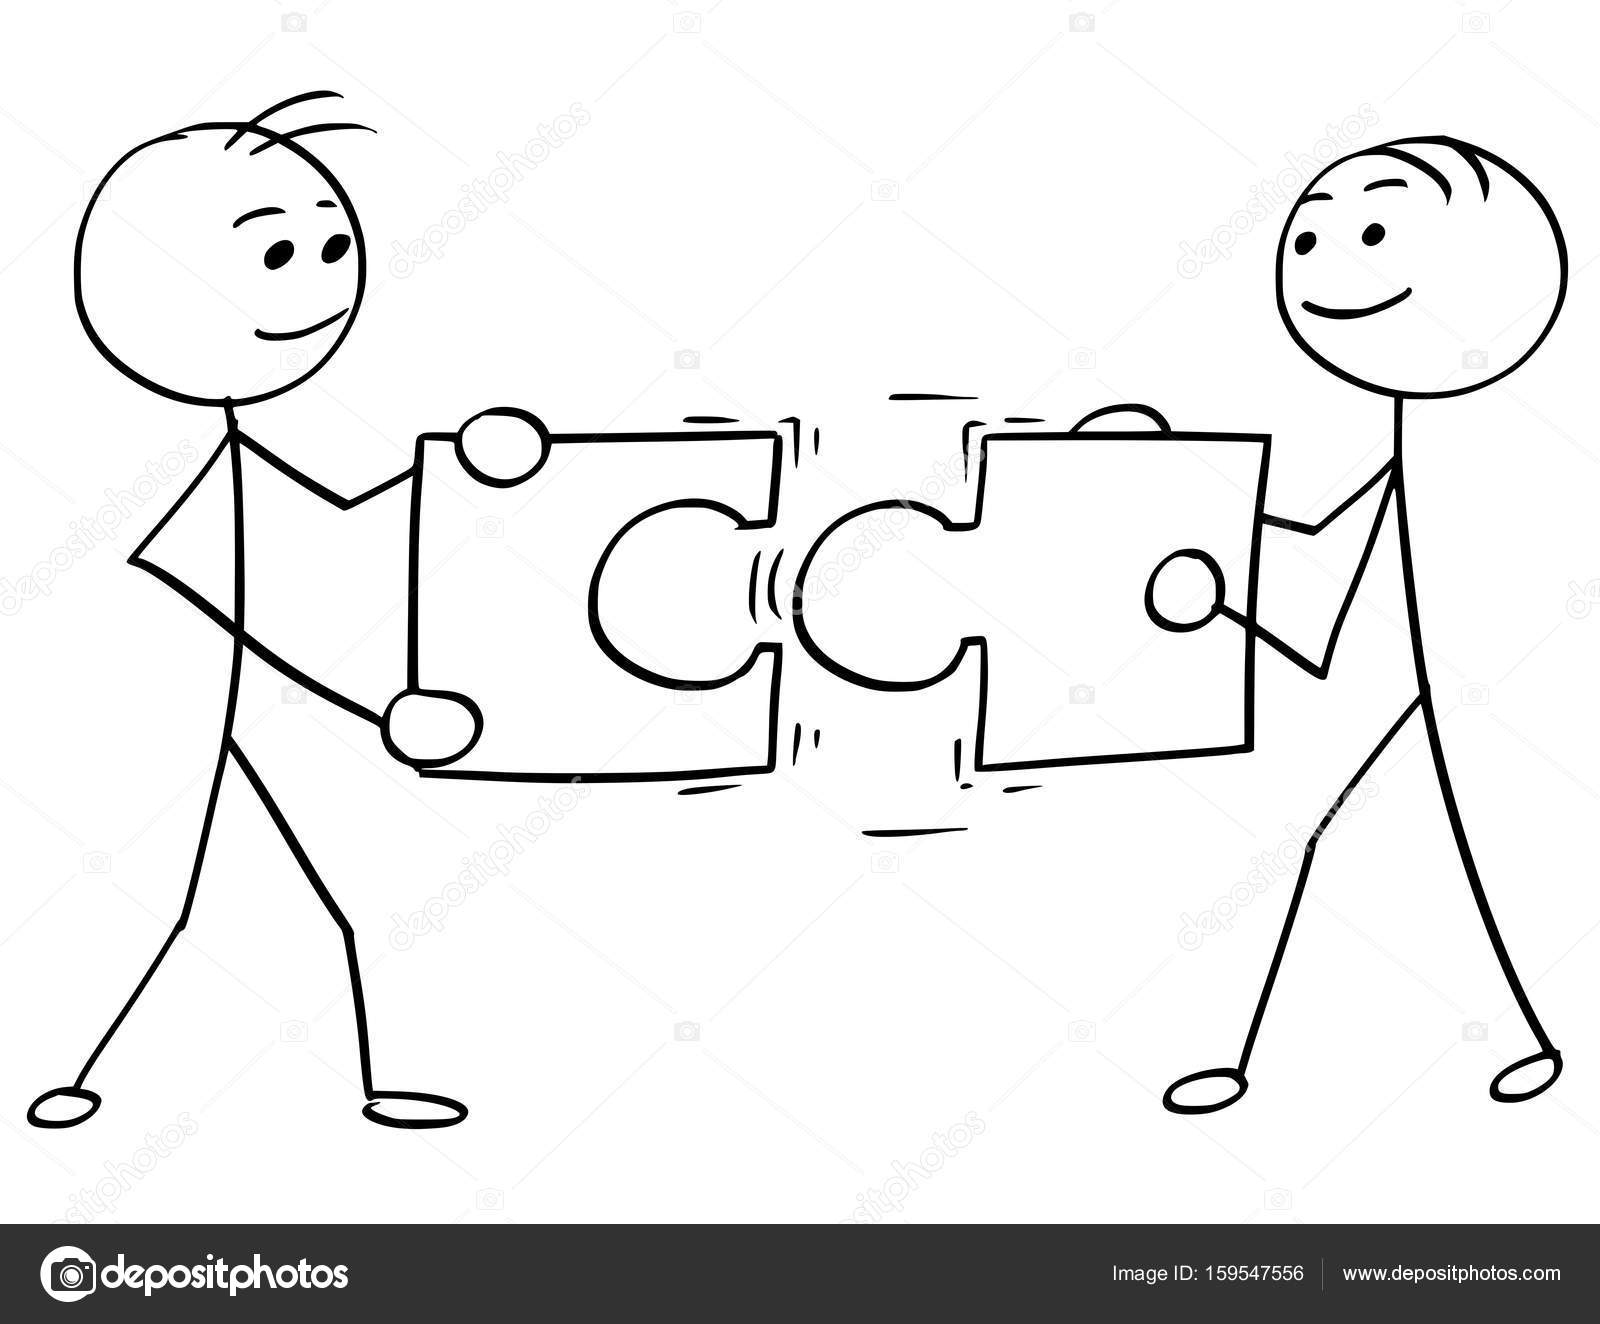 Vector Stick Man Cartoon of Two Men Holding a Large Jigsaw